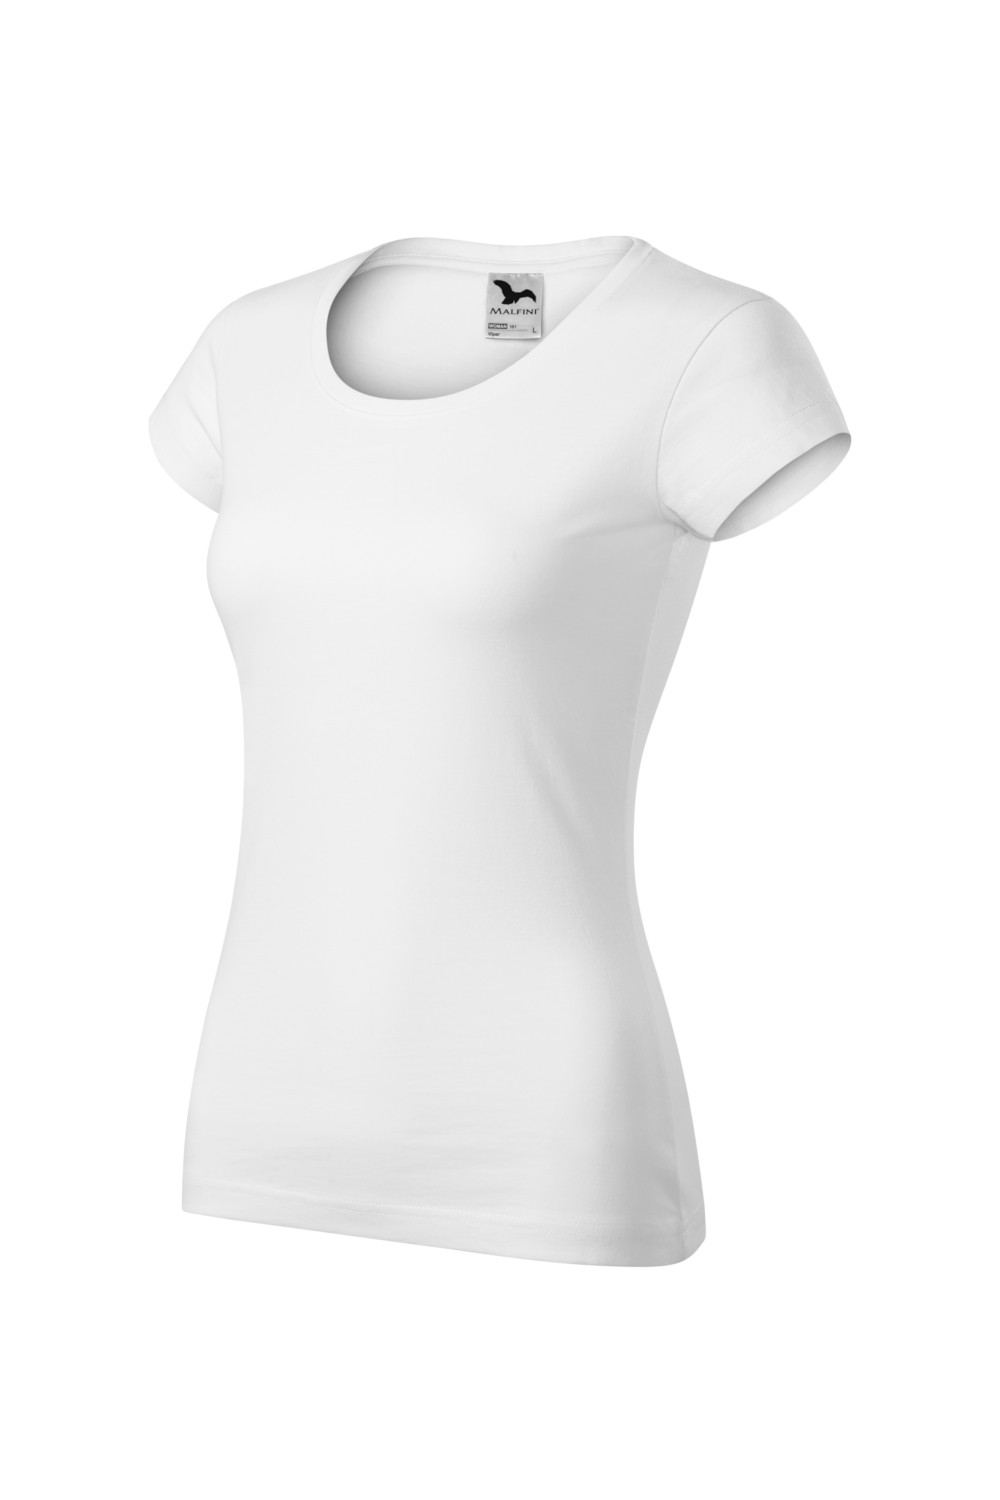 Koszulka damska 100% bawełna VIPER 161 biały